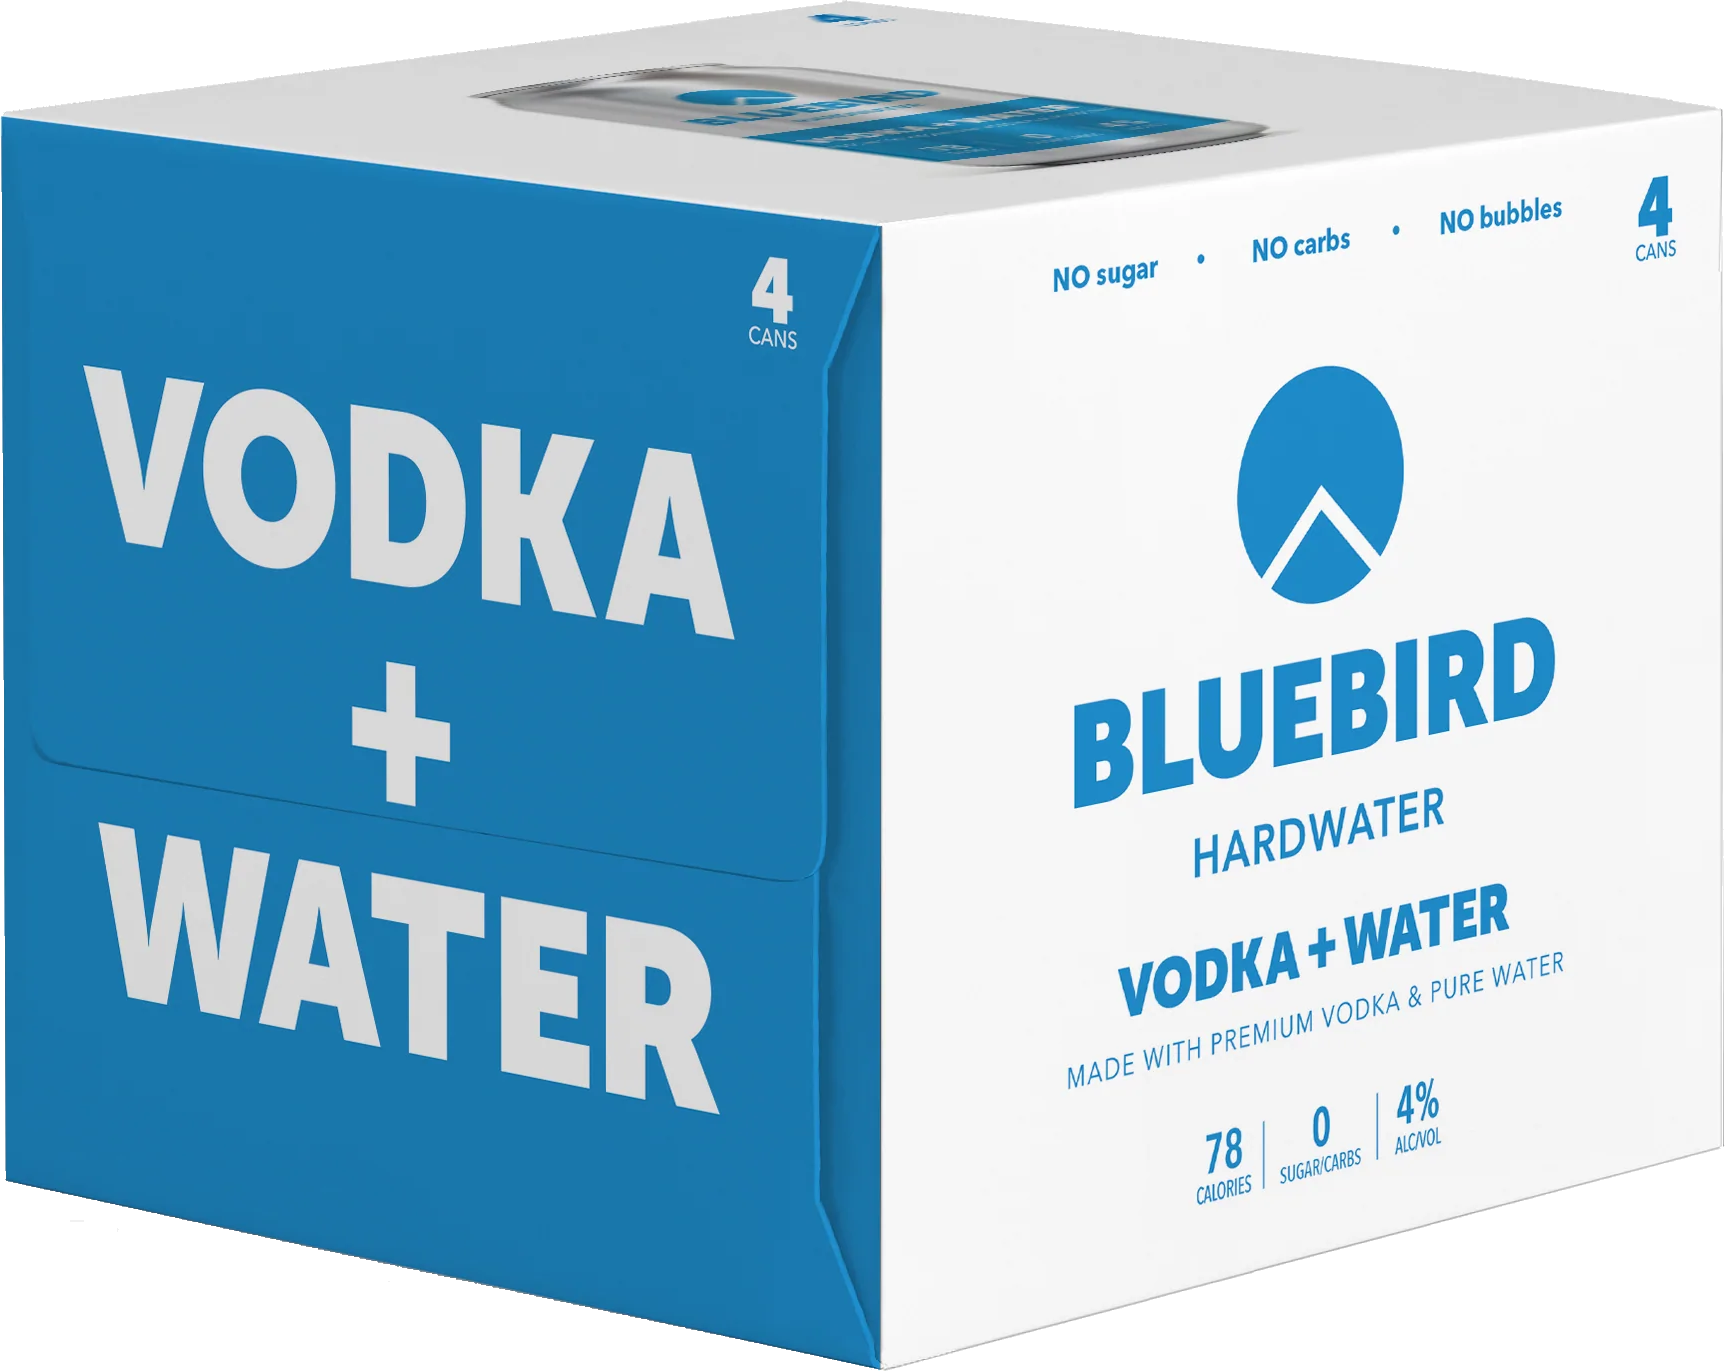 https://www.bottlesandcases.com/images/sites/bottlesandcases/labels/bluebird-hardwater-vodka-water-4-paks_1.jpg